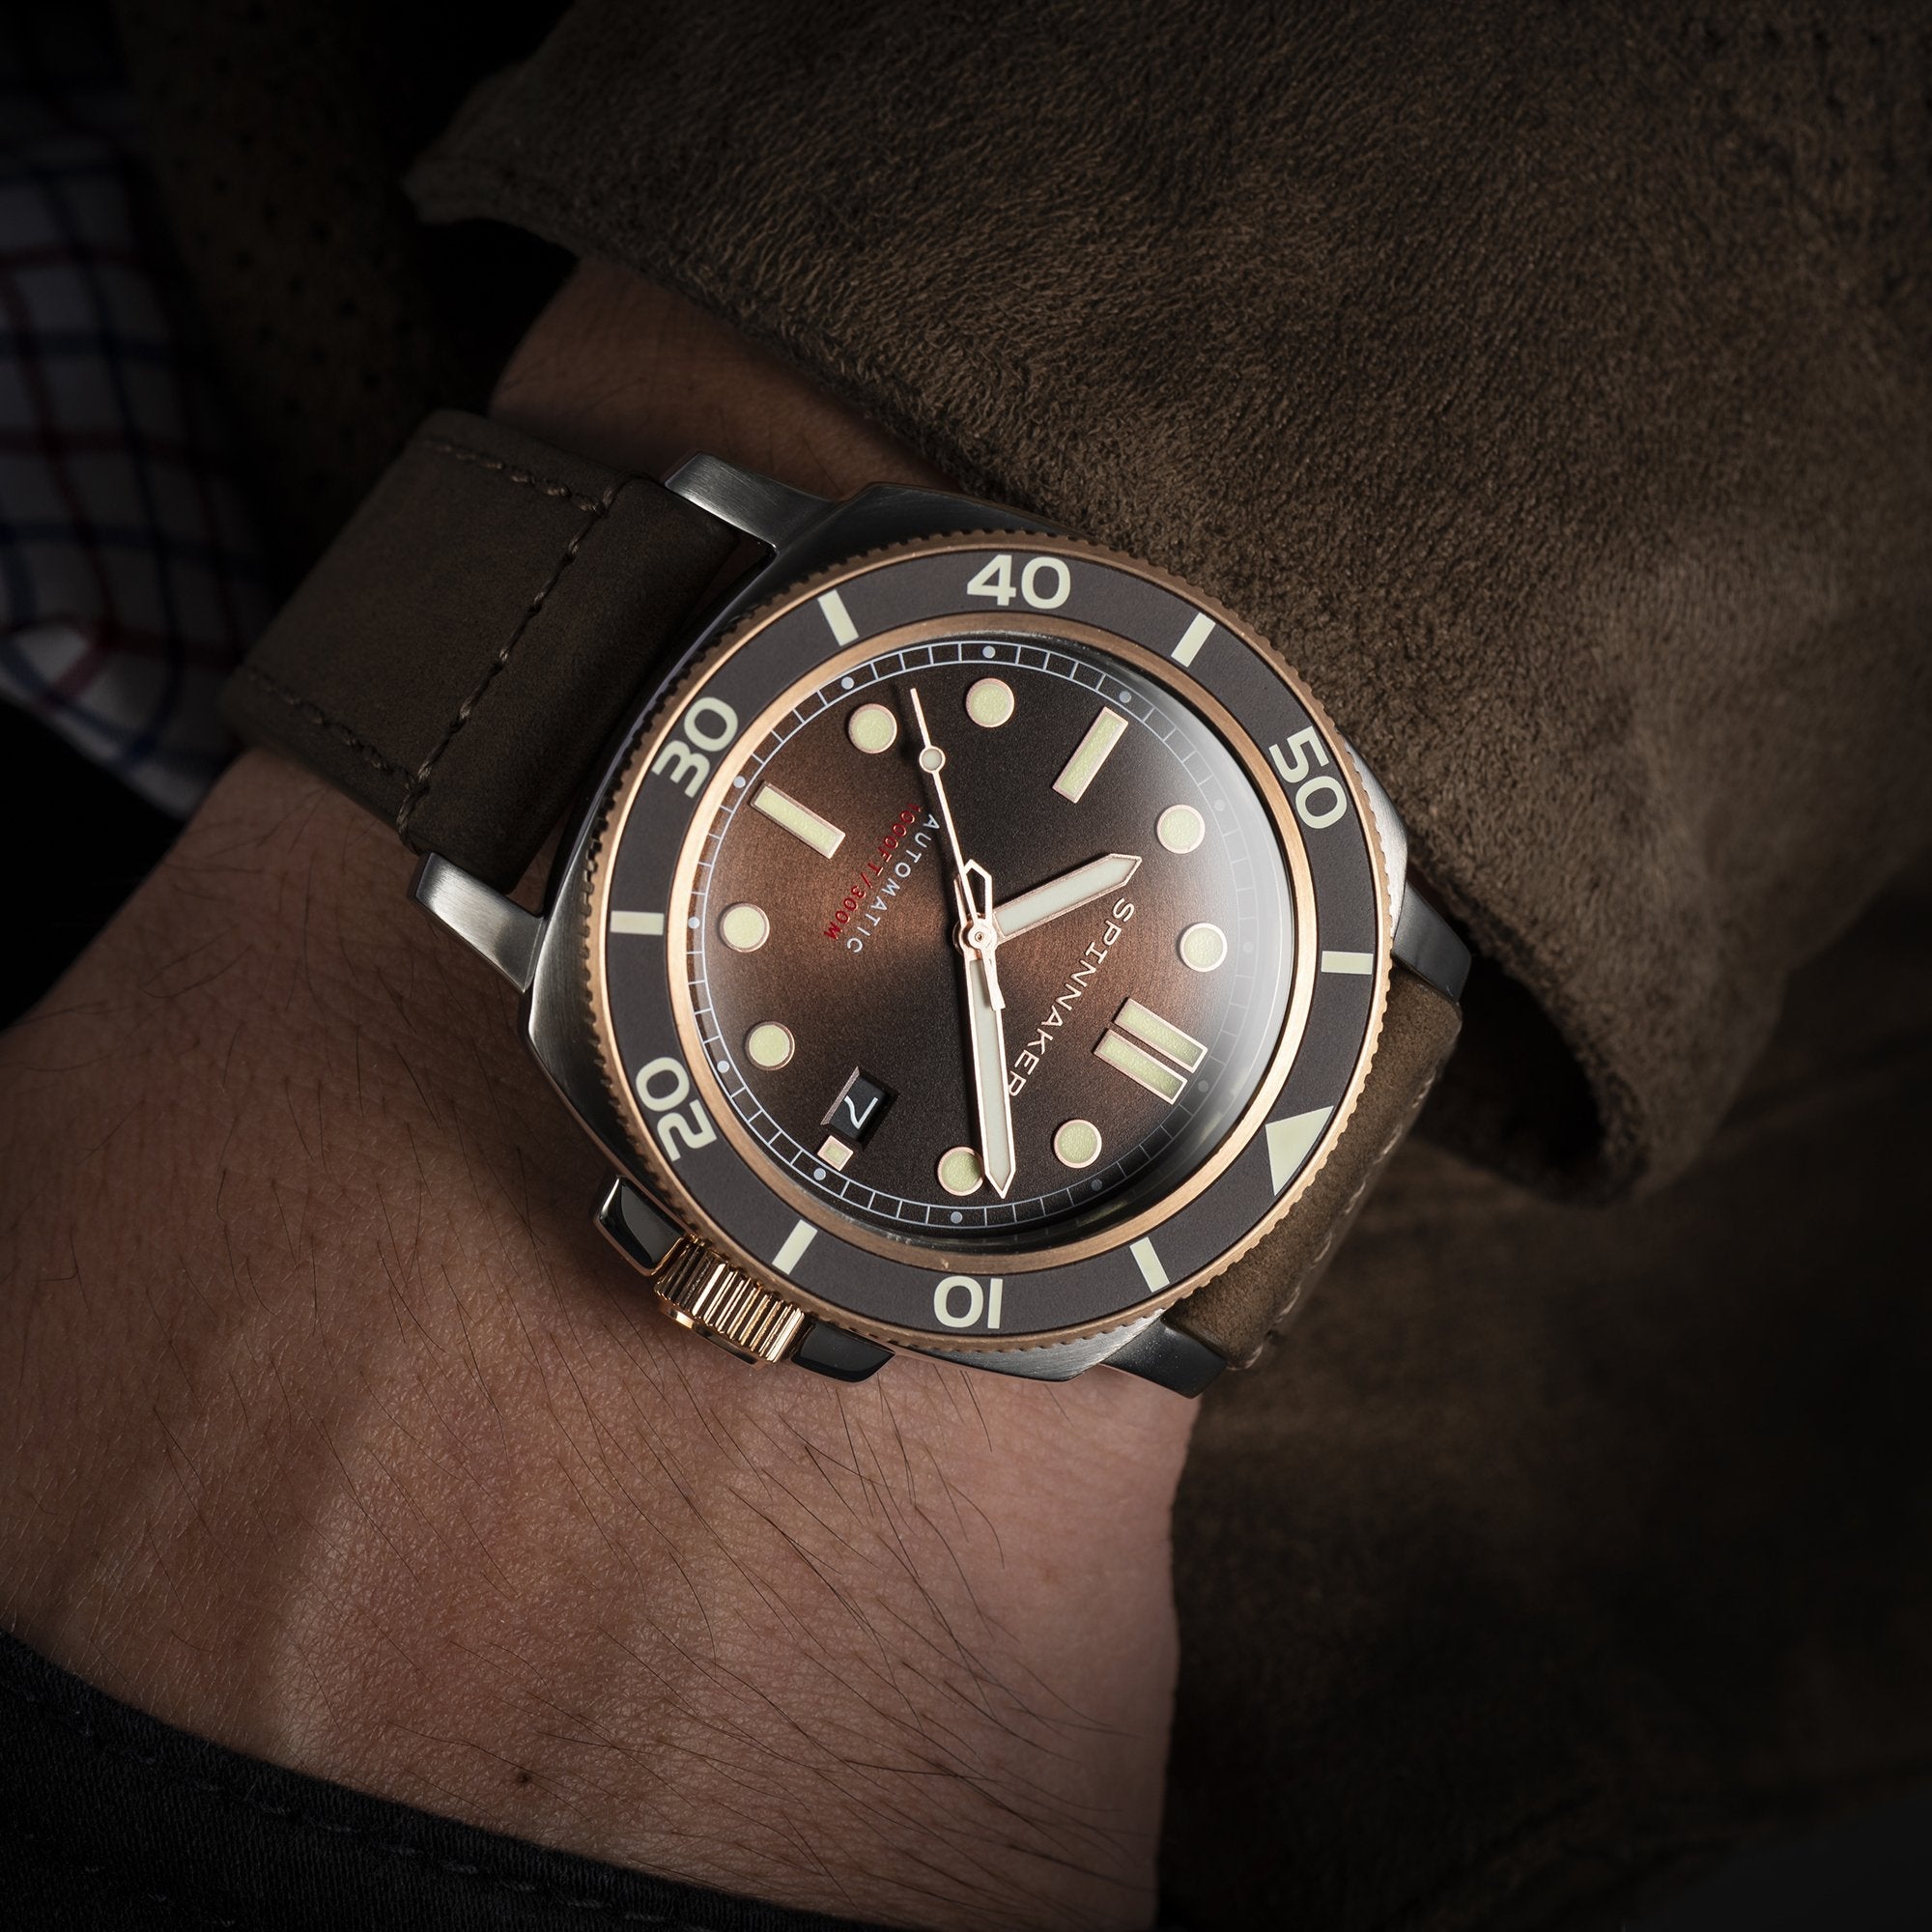 SPINNAKER Spinnaker Hull Diver Men's Automatic Cognac Brown Watch SP-5088-04